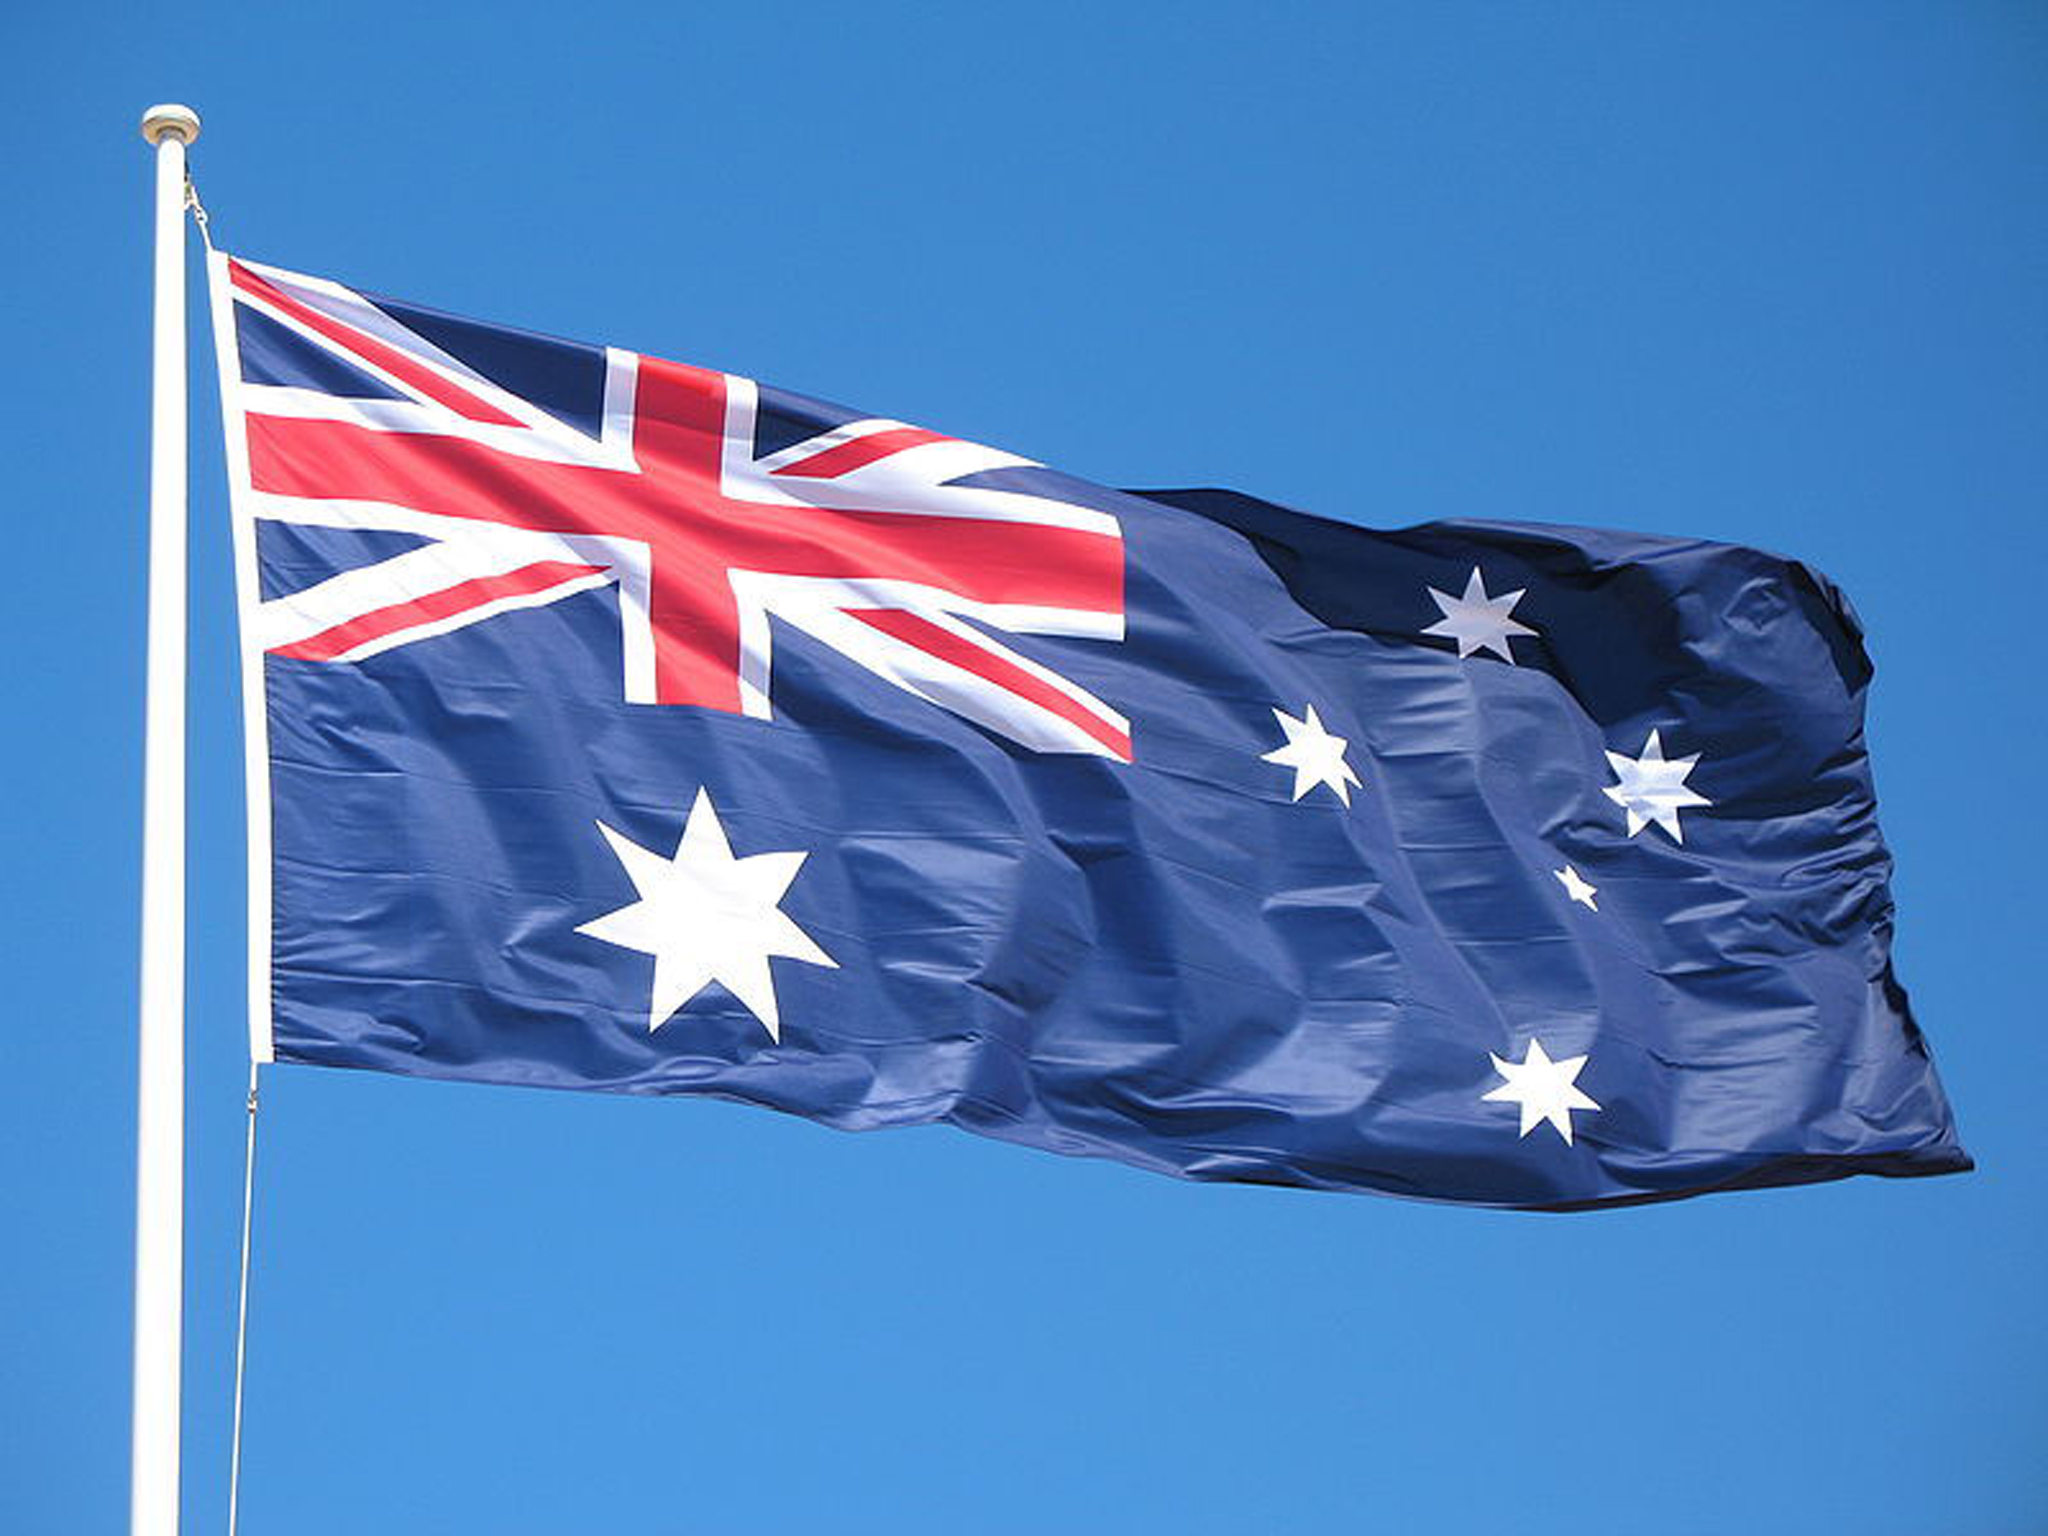 Tough Job of Tricolour Flags from USA to Australia - David McNamara